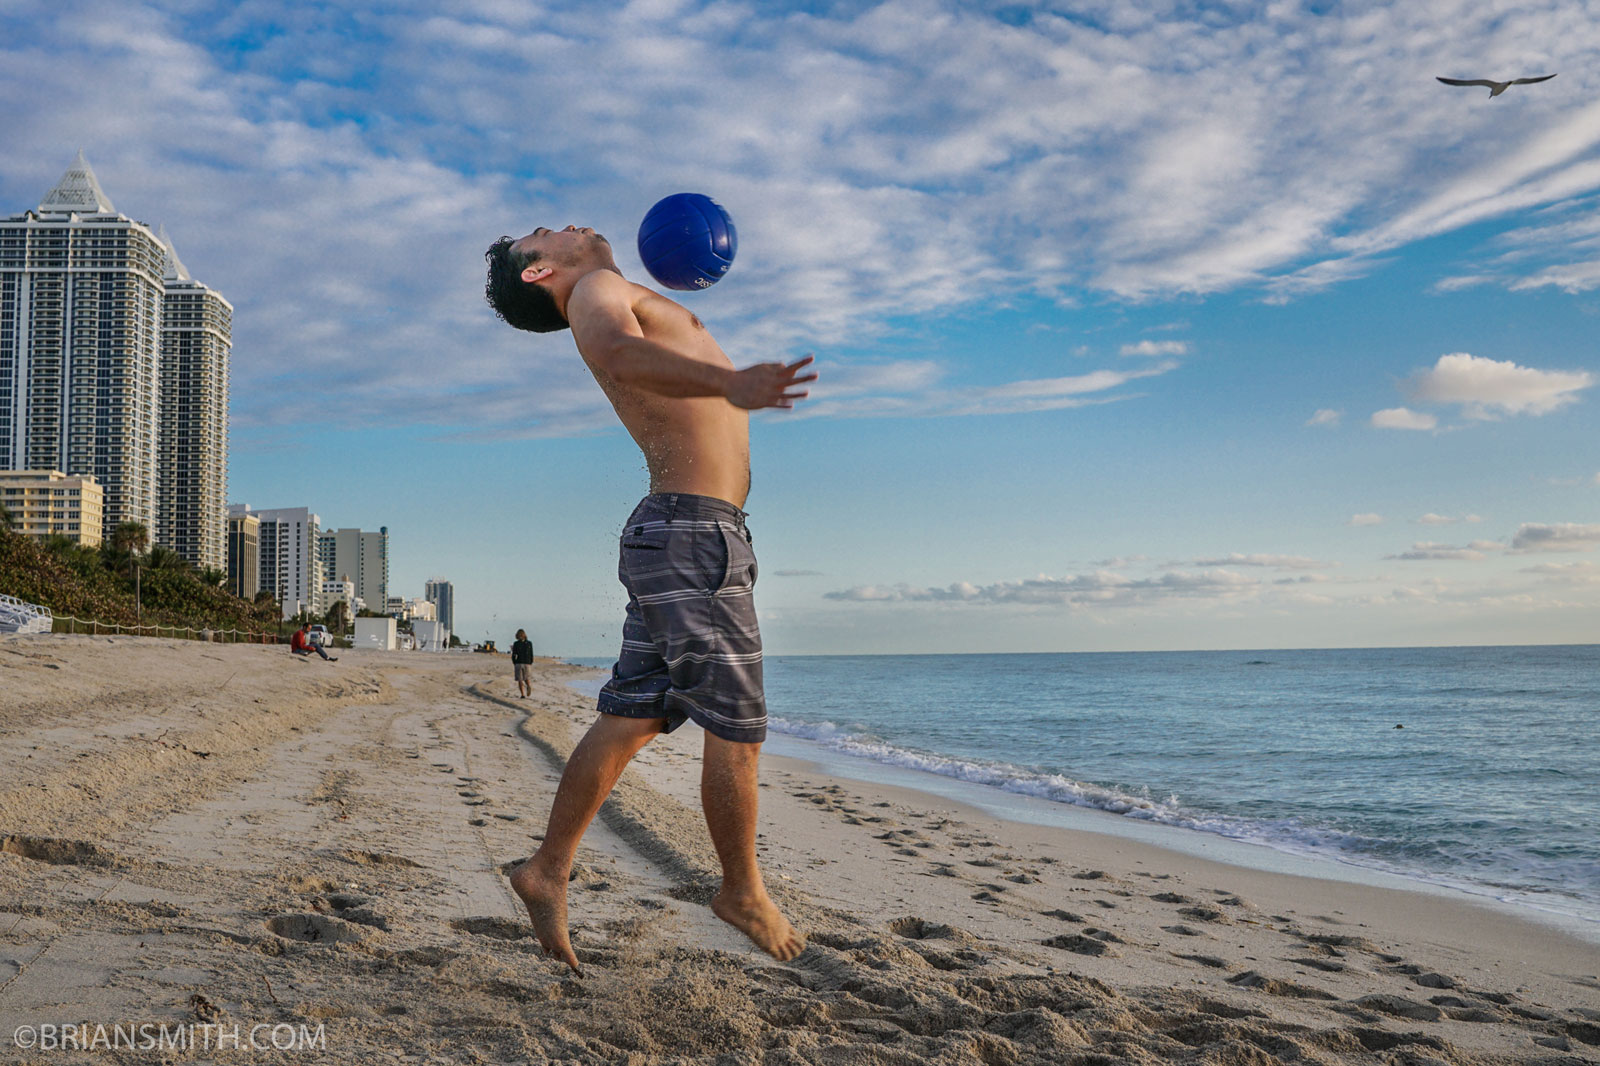 Beach Volleyball at Fountainbleau Hotel, Miami Beach shot on Sony a6300